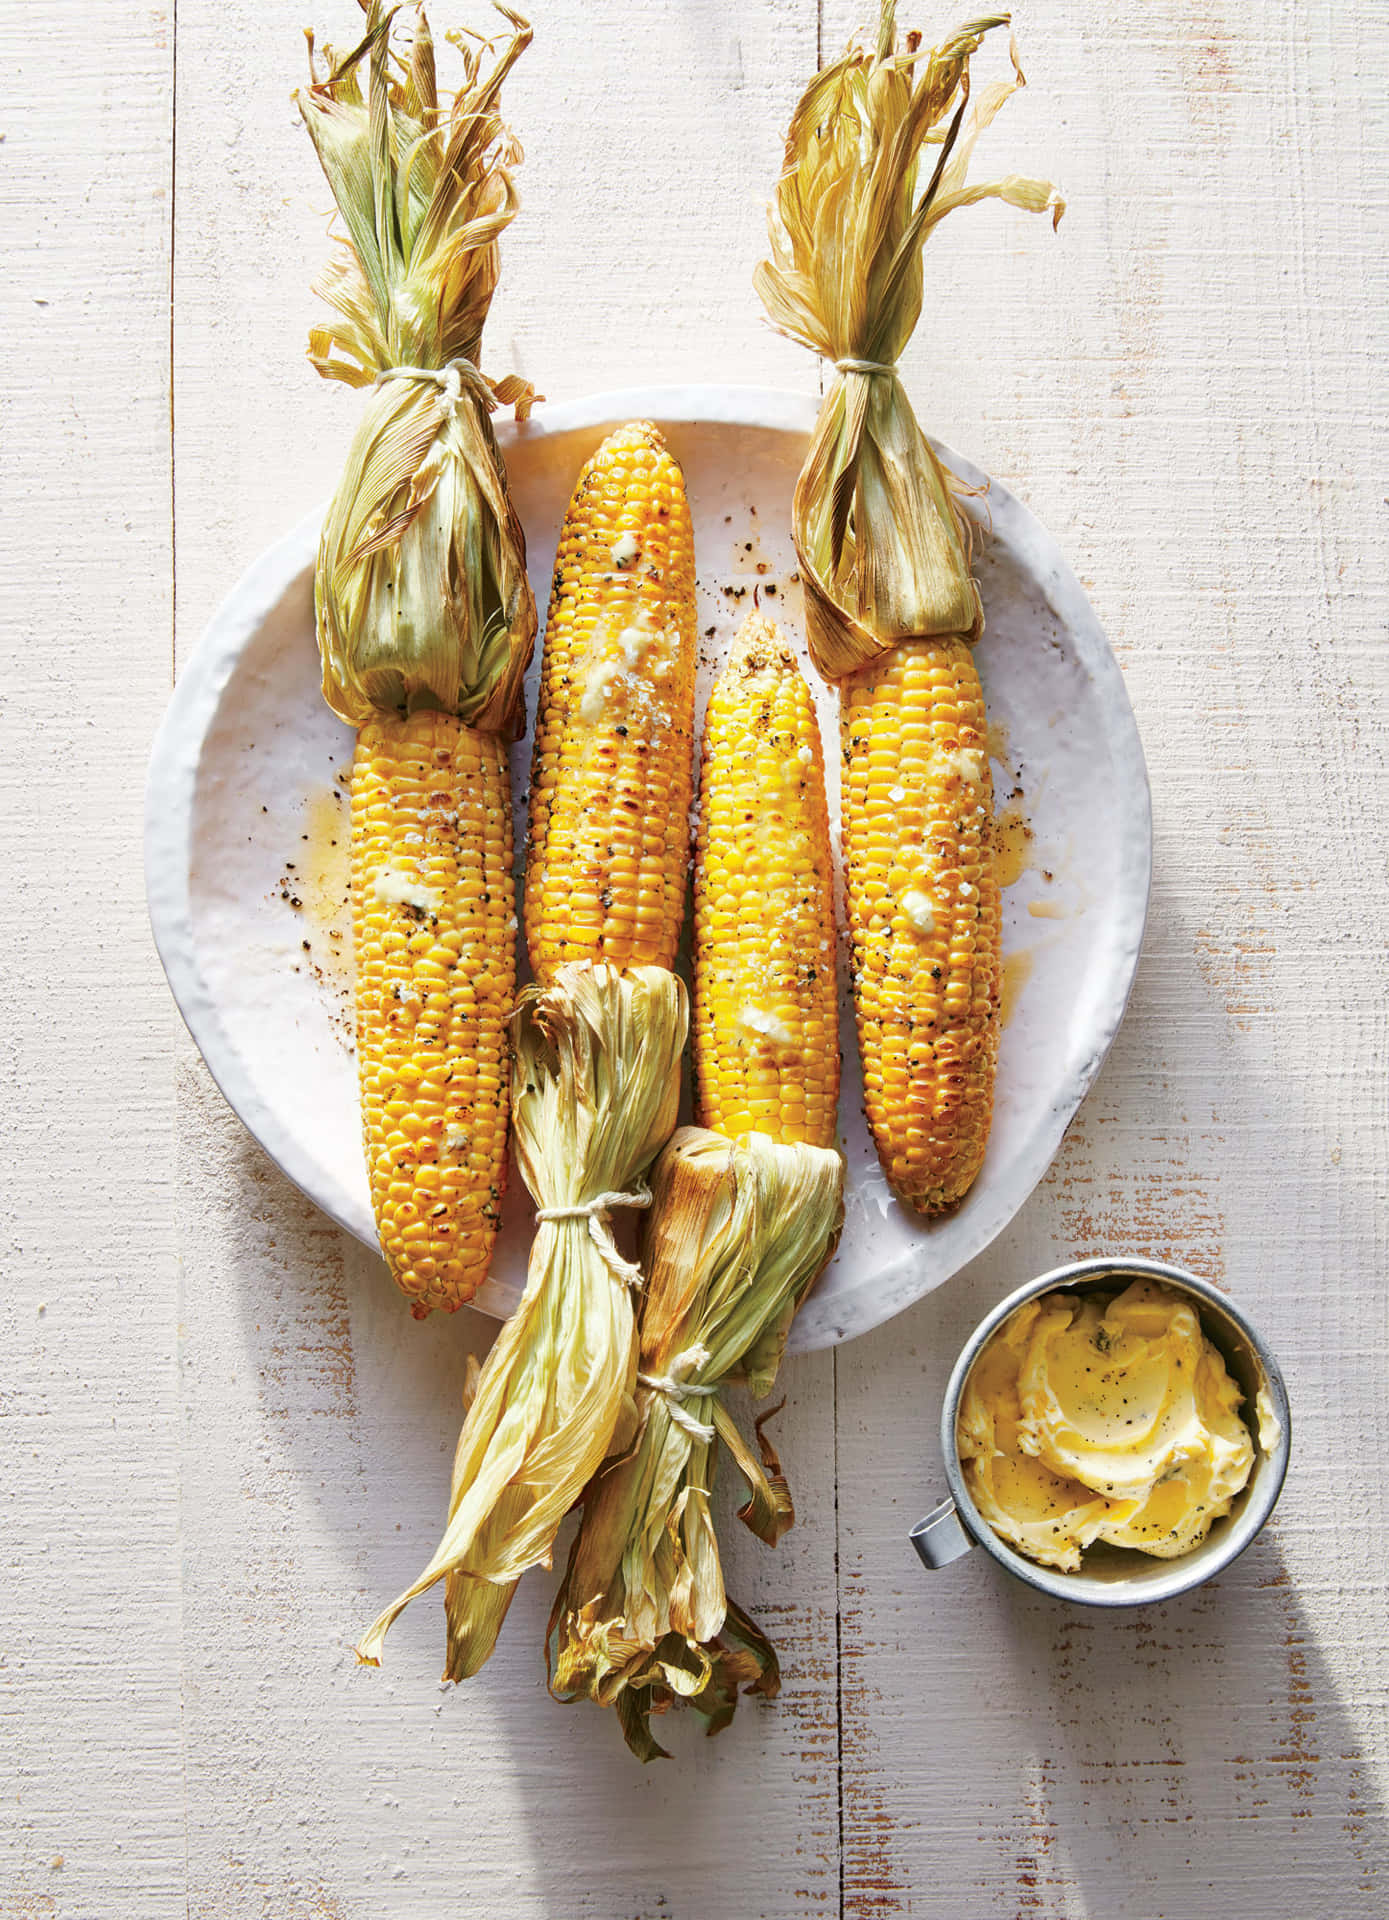 Golden Field Of Corn: A Lush Landscape